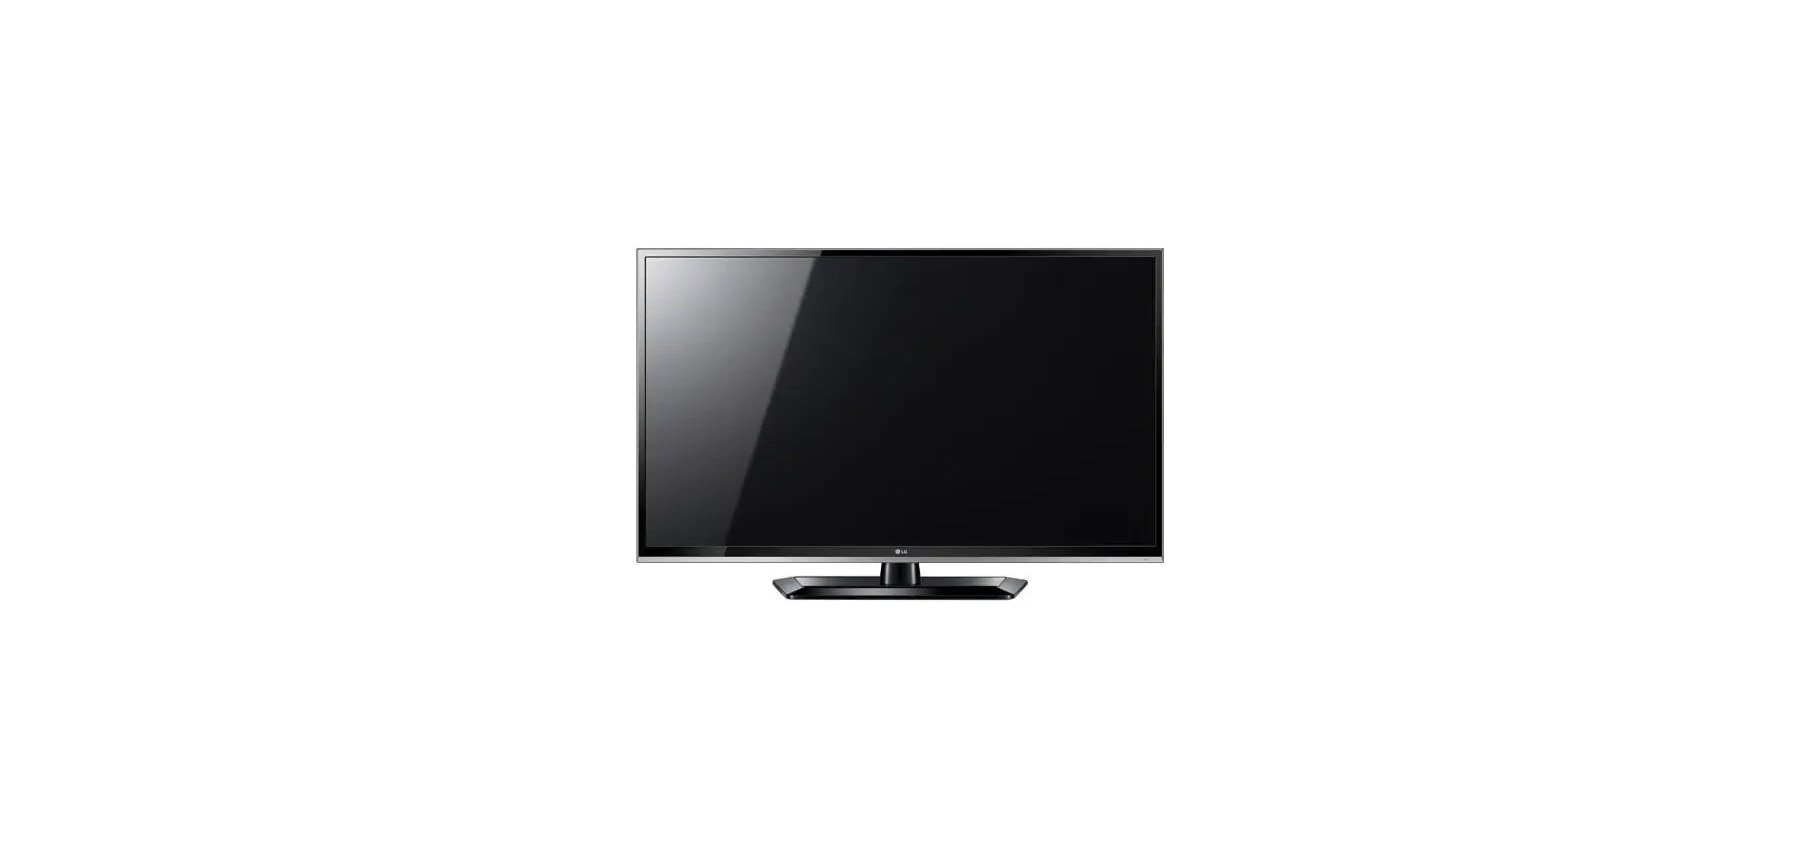 Telewizor LG 47LN540V Smart Tv